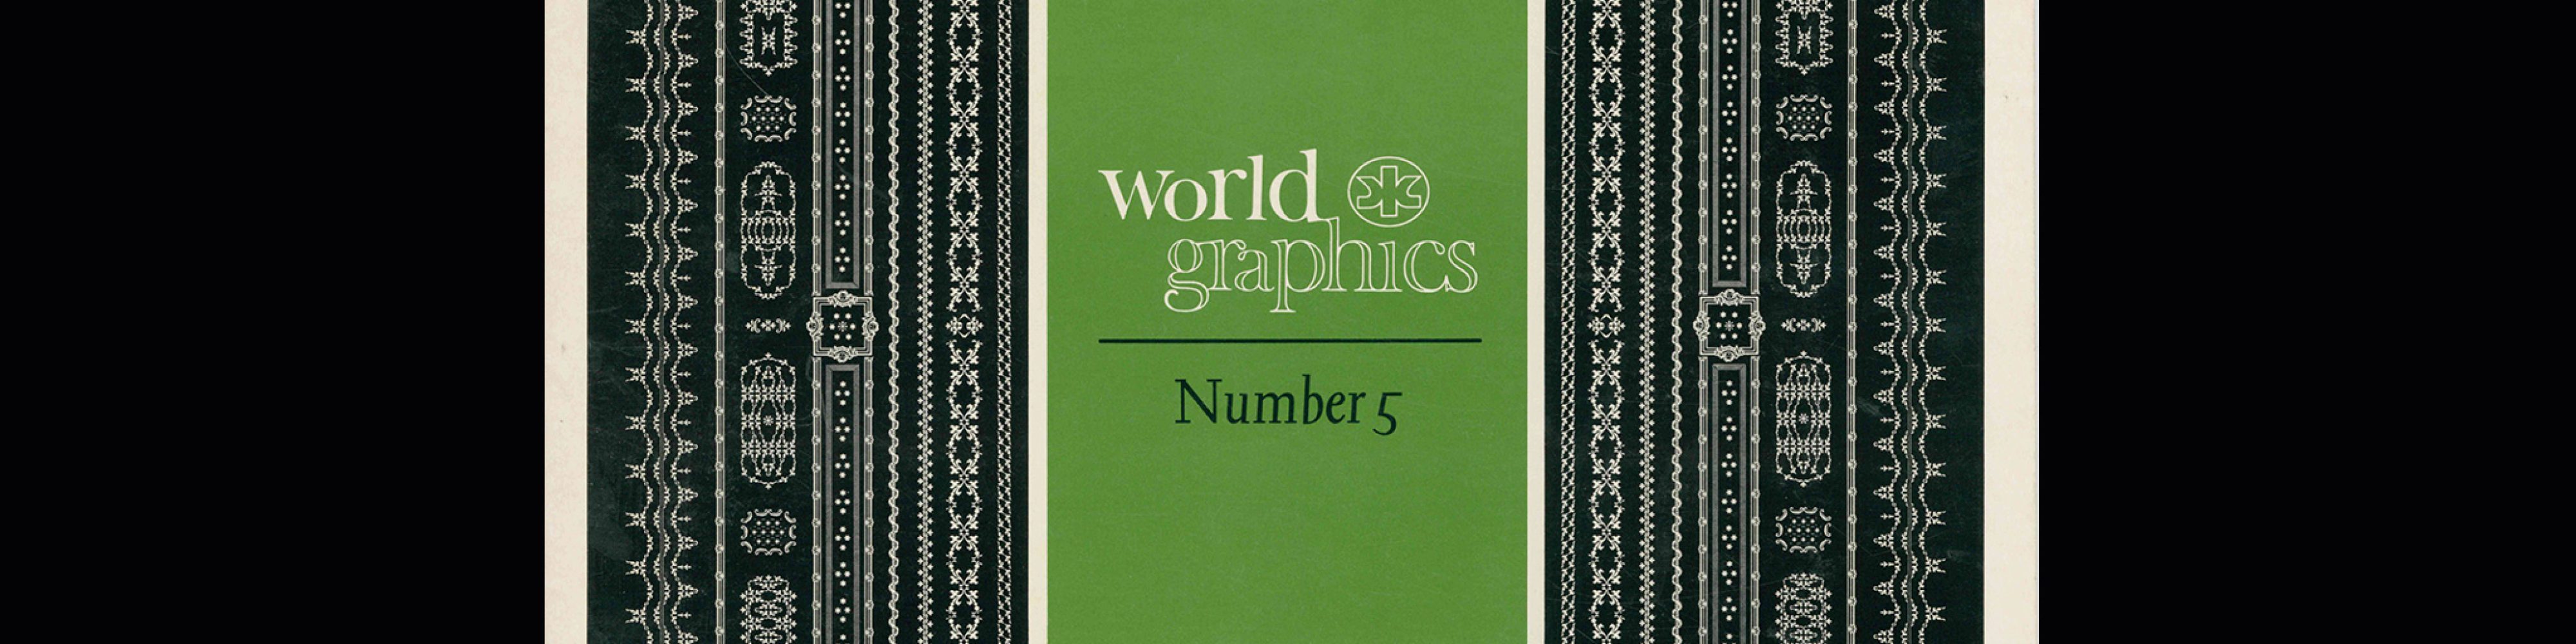 World Graphics, Issue 5, 1964